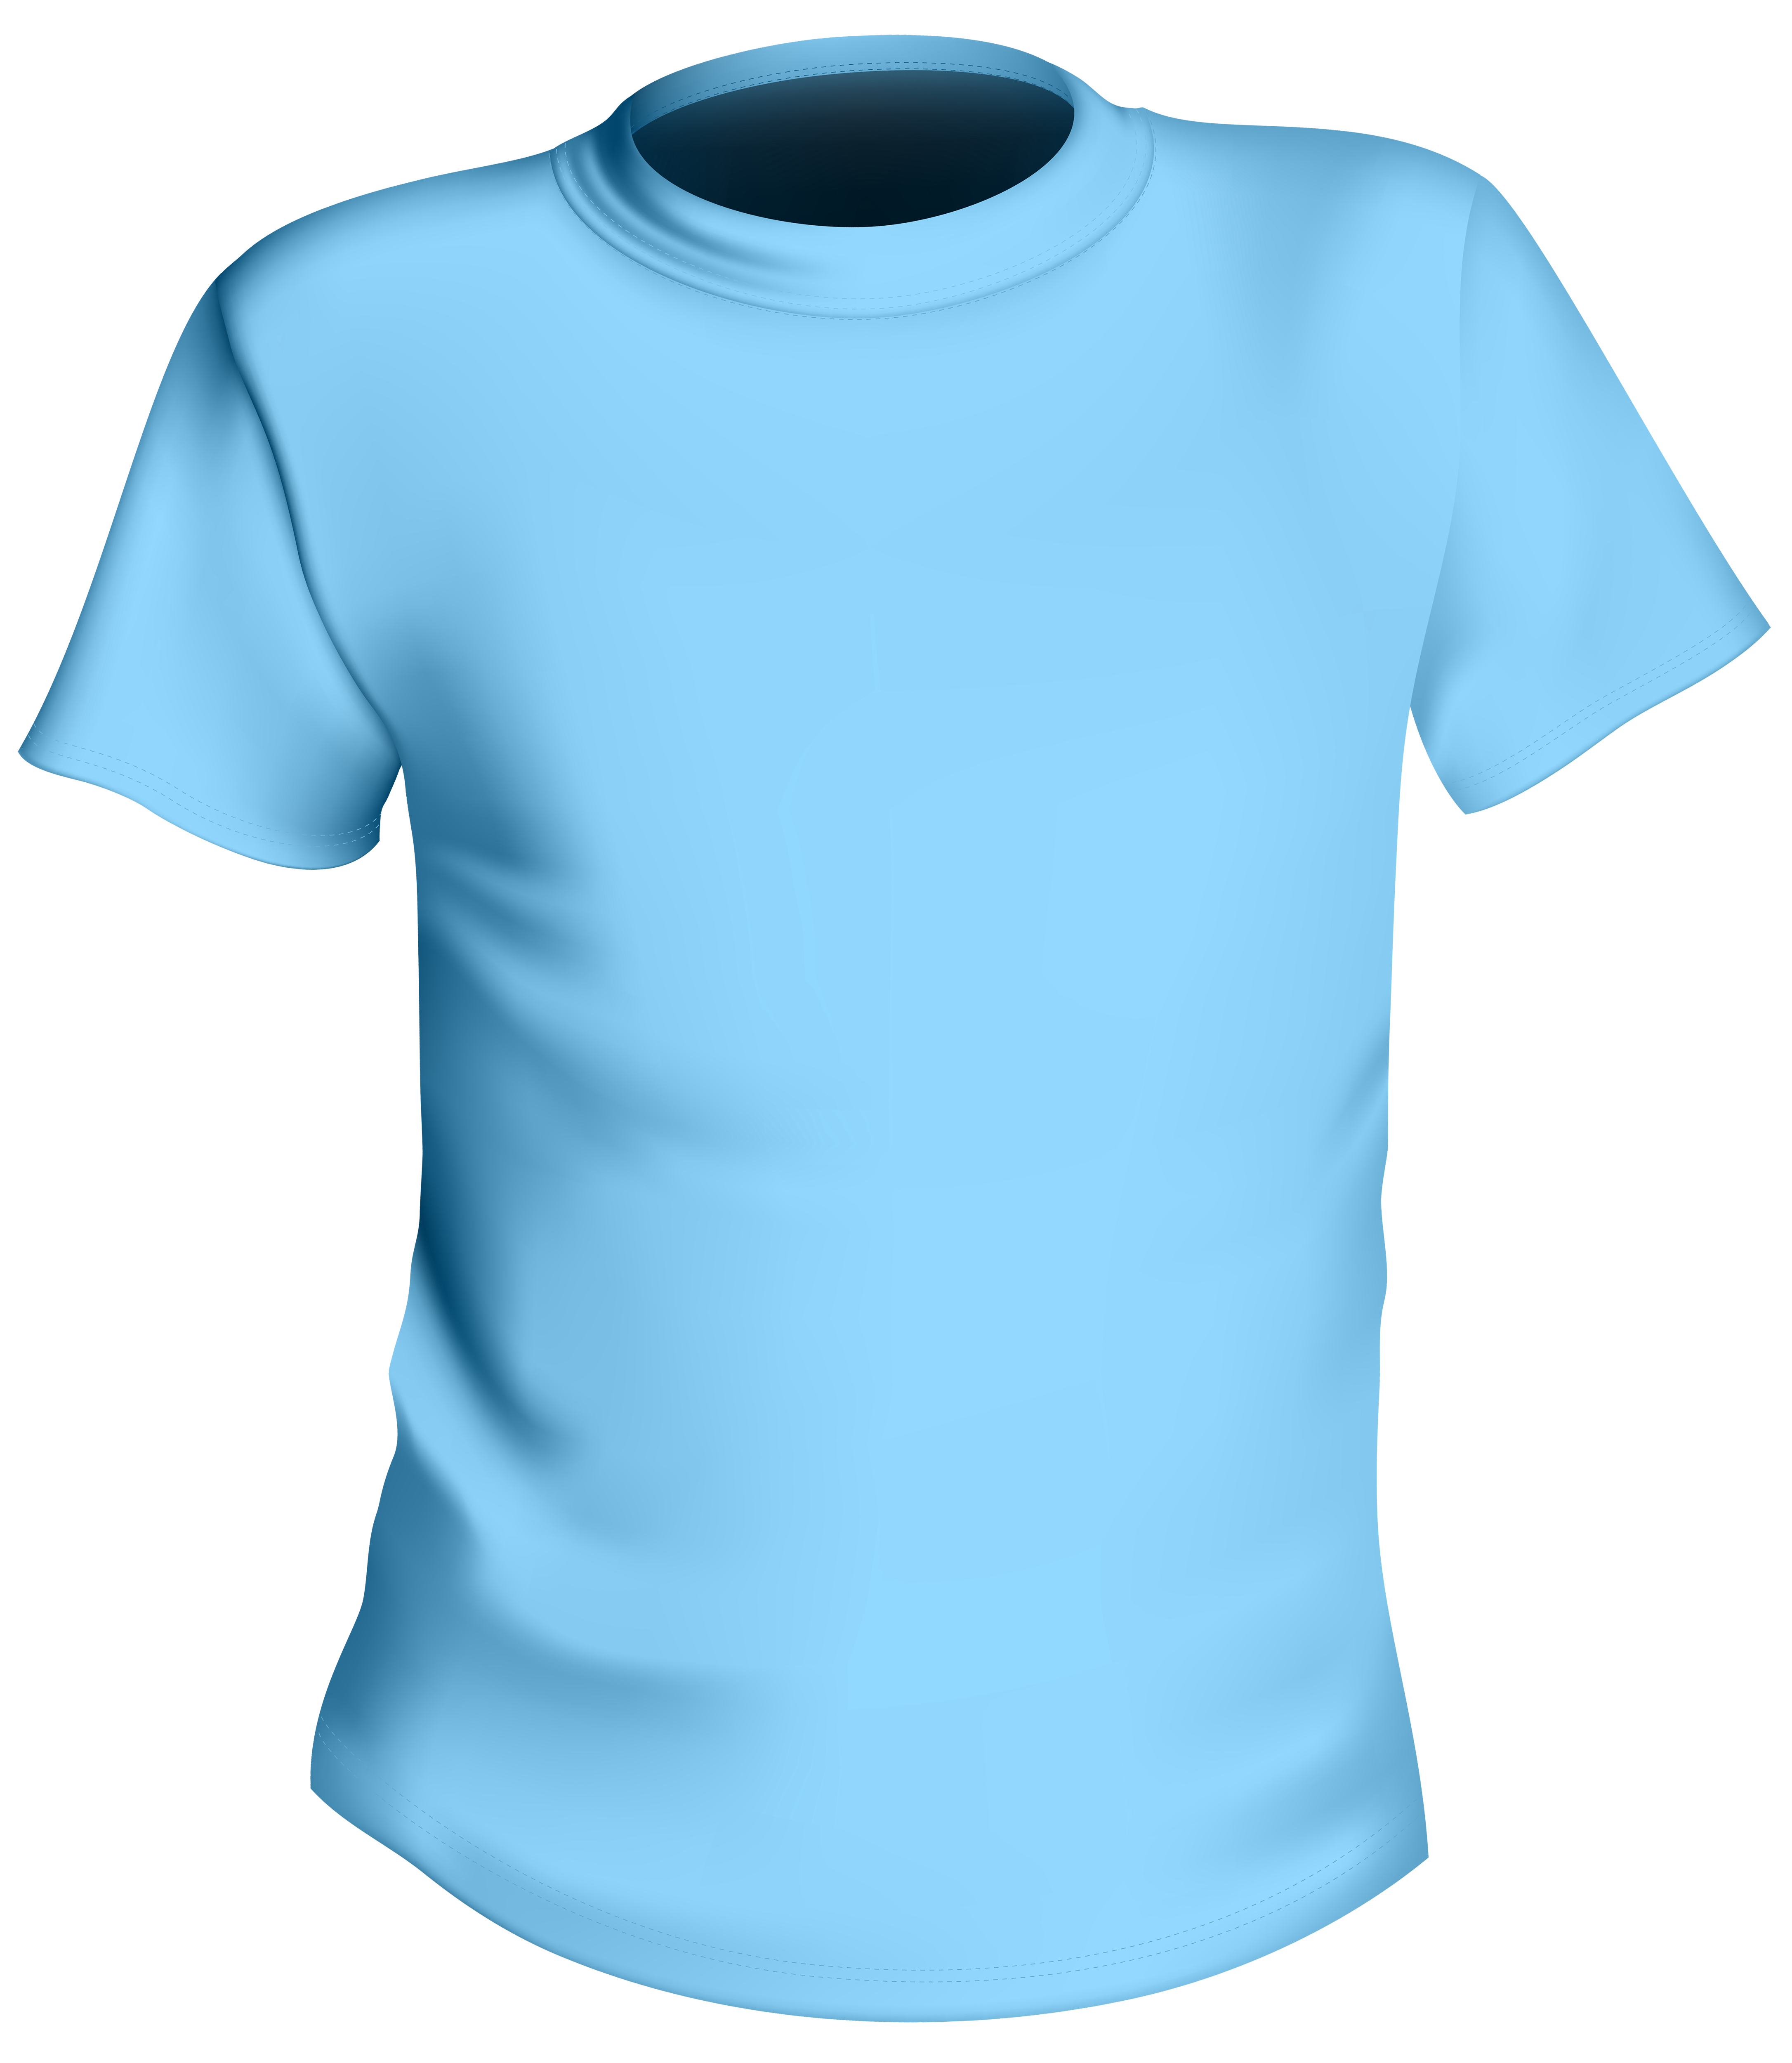 Blue Male Shirt Png Clipart Best Web Clipart